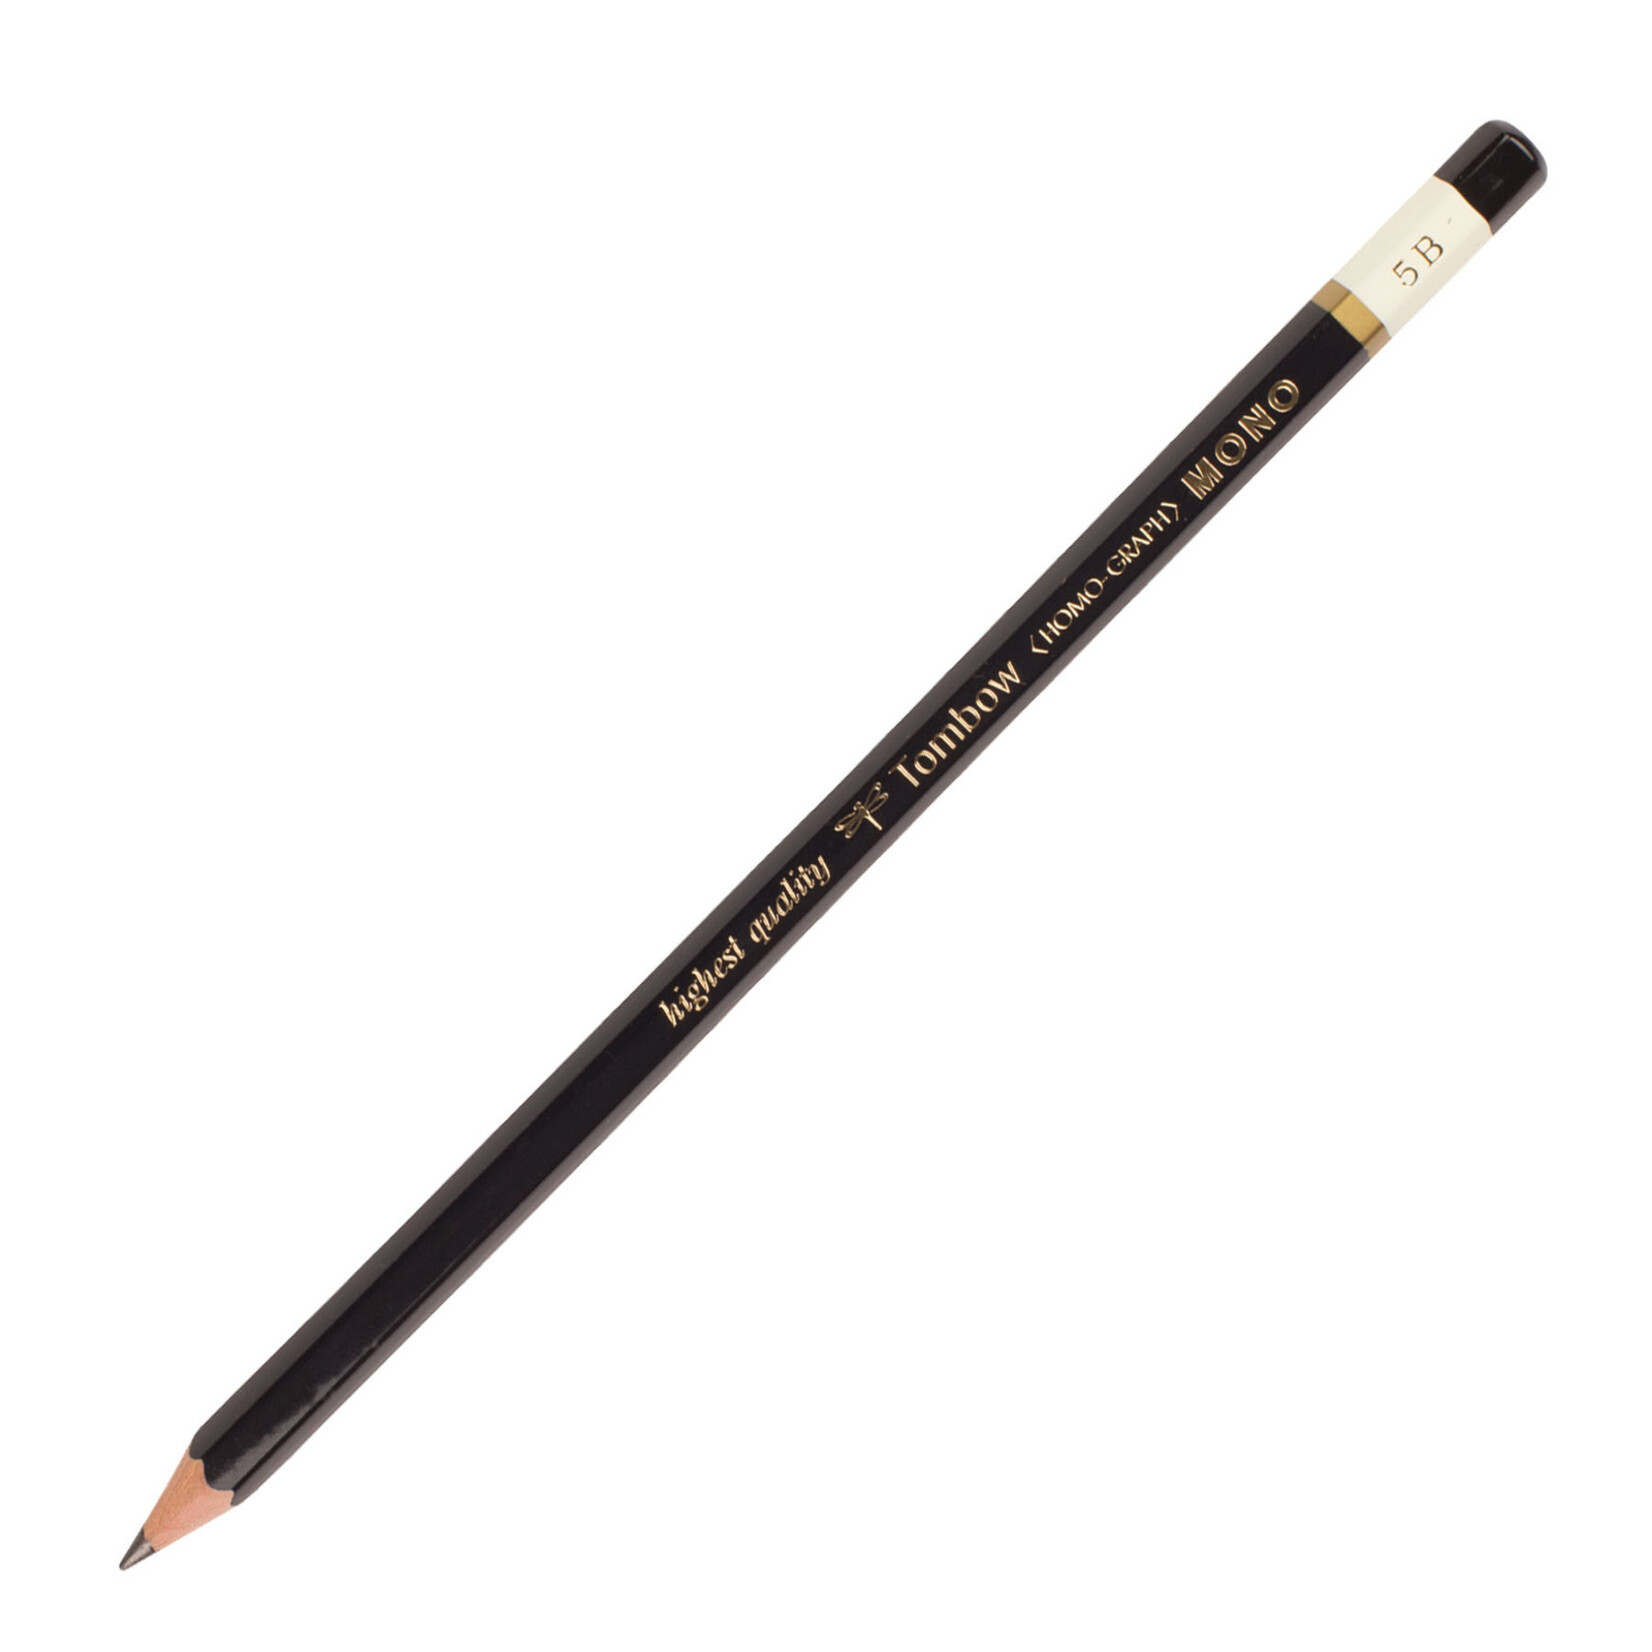 Tombow Mono Drawing Pencil 5B